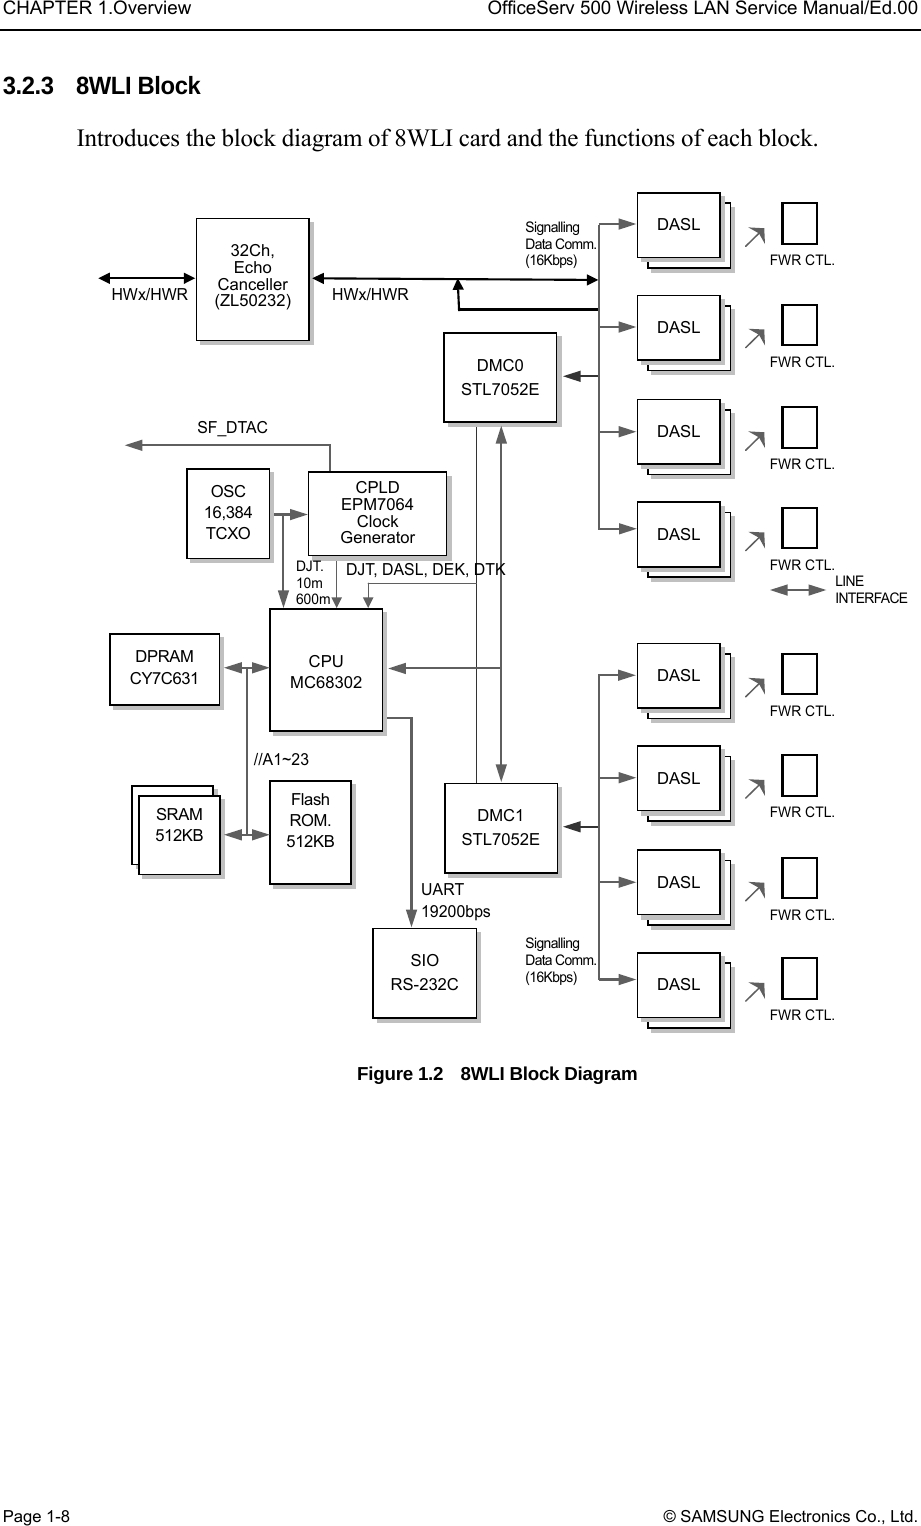 CHAPTER 1.Overview  OfficeServ 500 Wireless LAN Service Manual/Ed.00 Page 1-8 © SAMSUNG Electronics Co., Ltd. 3.2.3  8WLI Block  Introduces the block diagram of 8WLI card and the functions of each block.  Figure 1.2    8WLI Block Diagram    FWR CTL. DASLDASLDASLDASLDASLDASLDASLDASLDMC0STL7052EFWR CTL. FWR CTL. FWR CTL. Signalling Data Comm.(16Kbps) LINE INTERFACEFWR CTL. DASLDASLDASLDASLDASLDASLDASLDASLDMC1STL7052EFWR CTL. FWR CTL. FWR CTL. Signalling Data Comm.(16Kbps)   CPU MC68302 SIO RS-232CFlash ROM. 512KB  SRAM 512K Words SRAM 512KB DPRAM CY7C631 CPLDEPM7064Clock GeneratorOSC 16,384 TCXO DJT. 10m 600m DJT, DASL, DEK, DTK//A1~23 UART 19200bps SF_DTAC 32Ch, Echo Canceller (ZL50232) HWx/HWRHWx/HWR